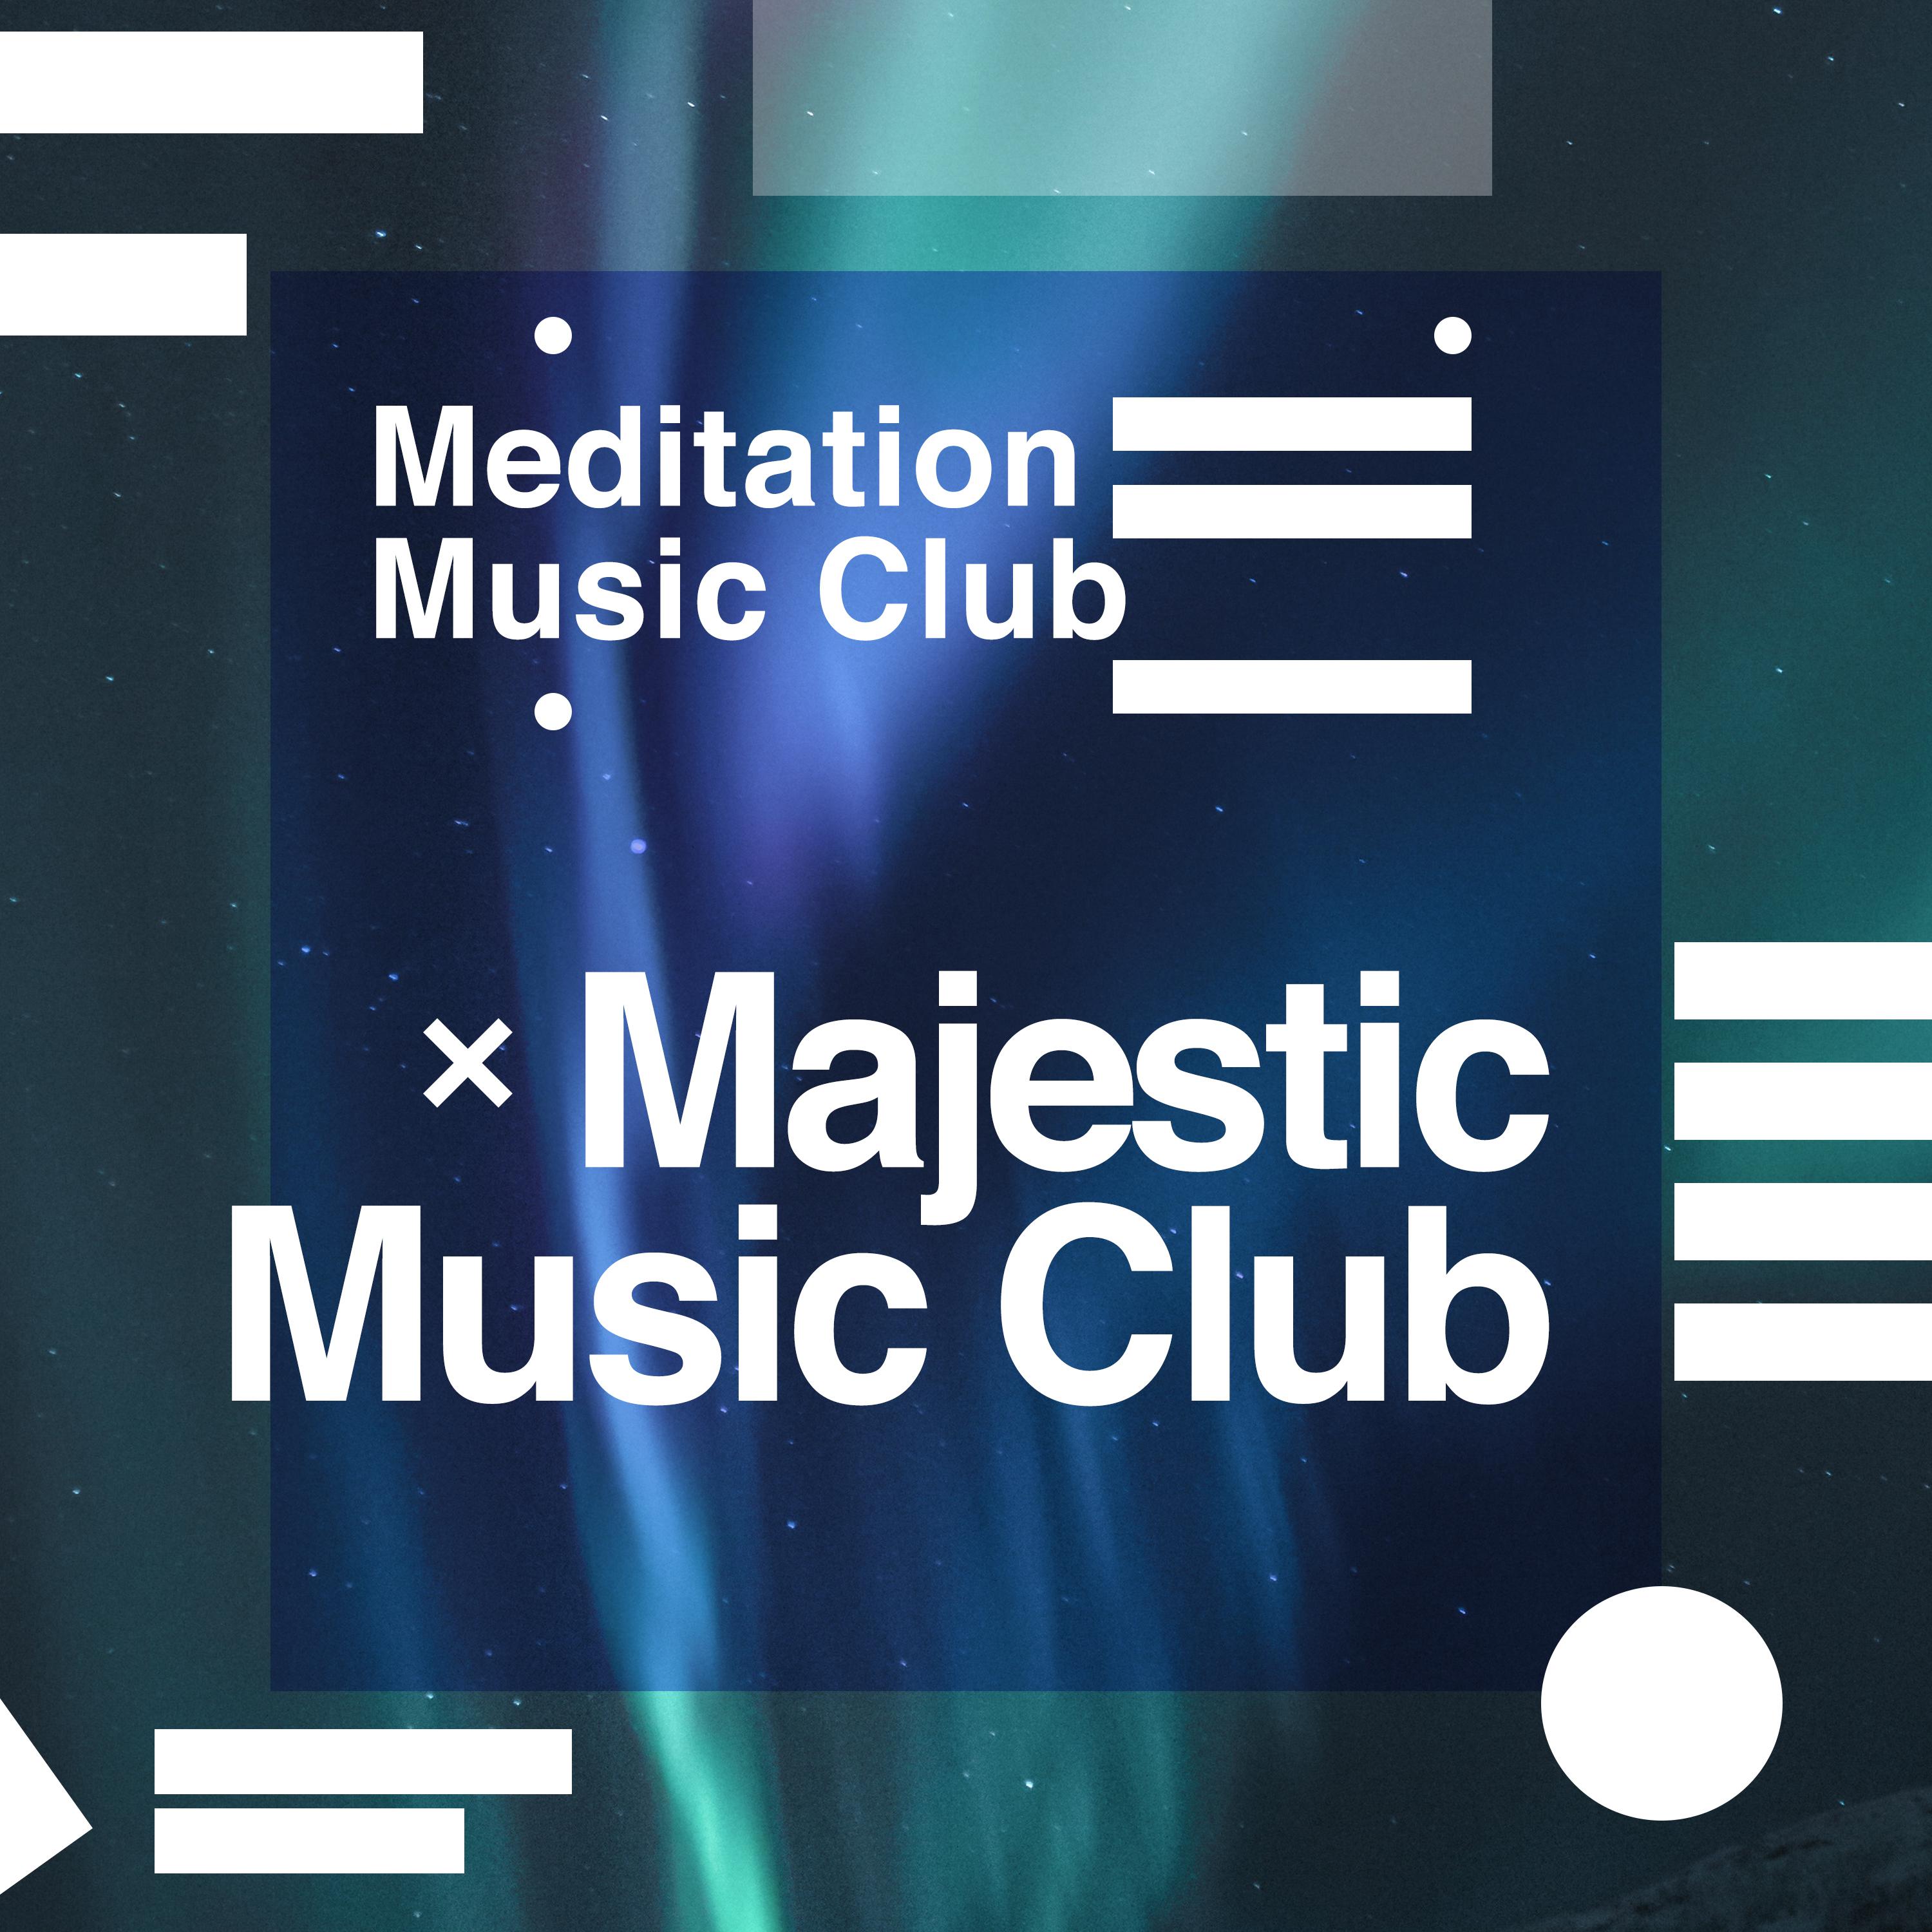 Majestic Music Club